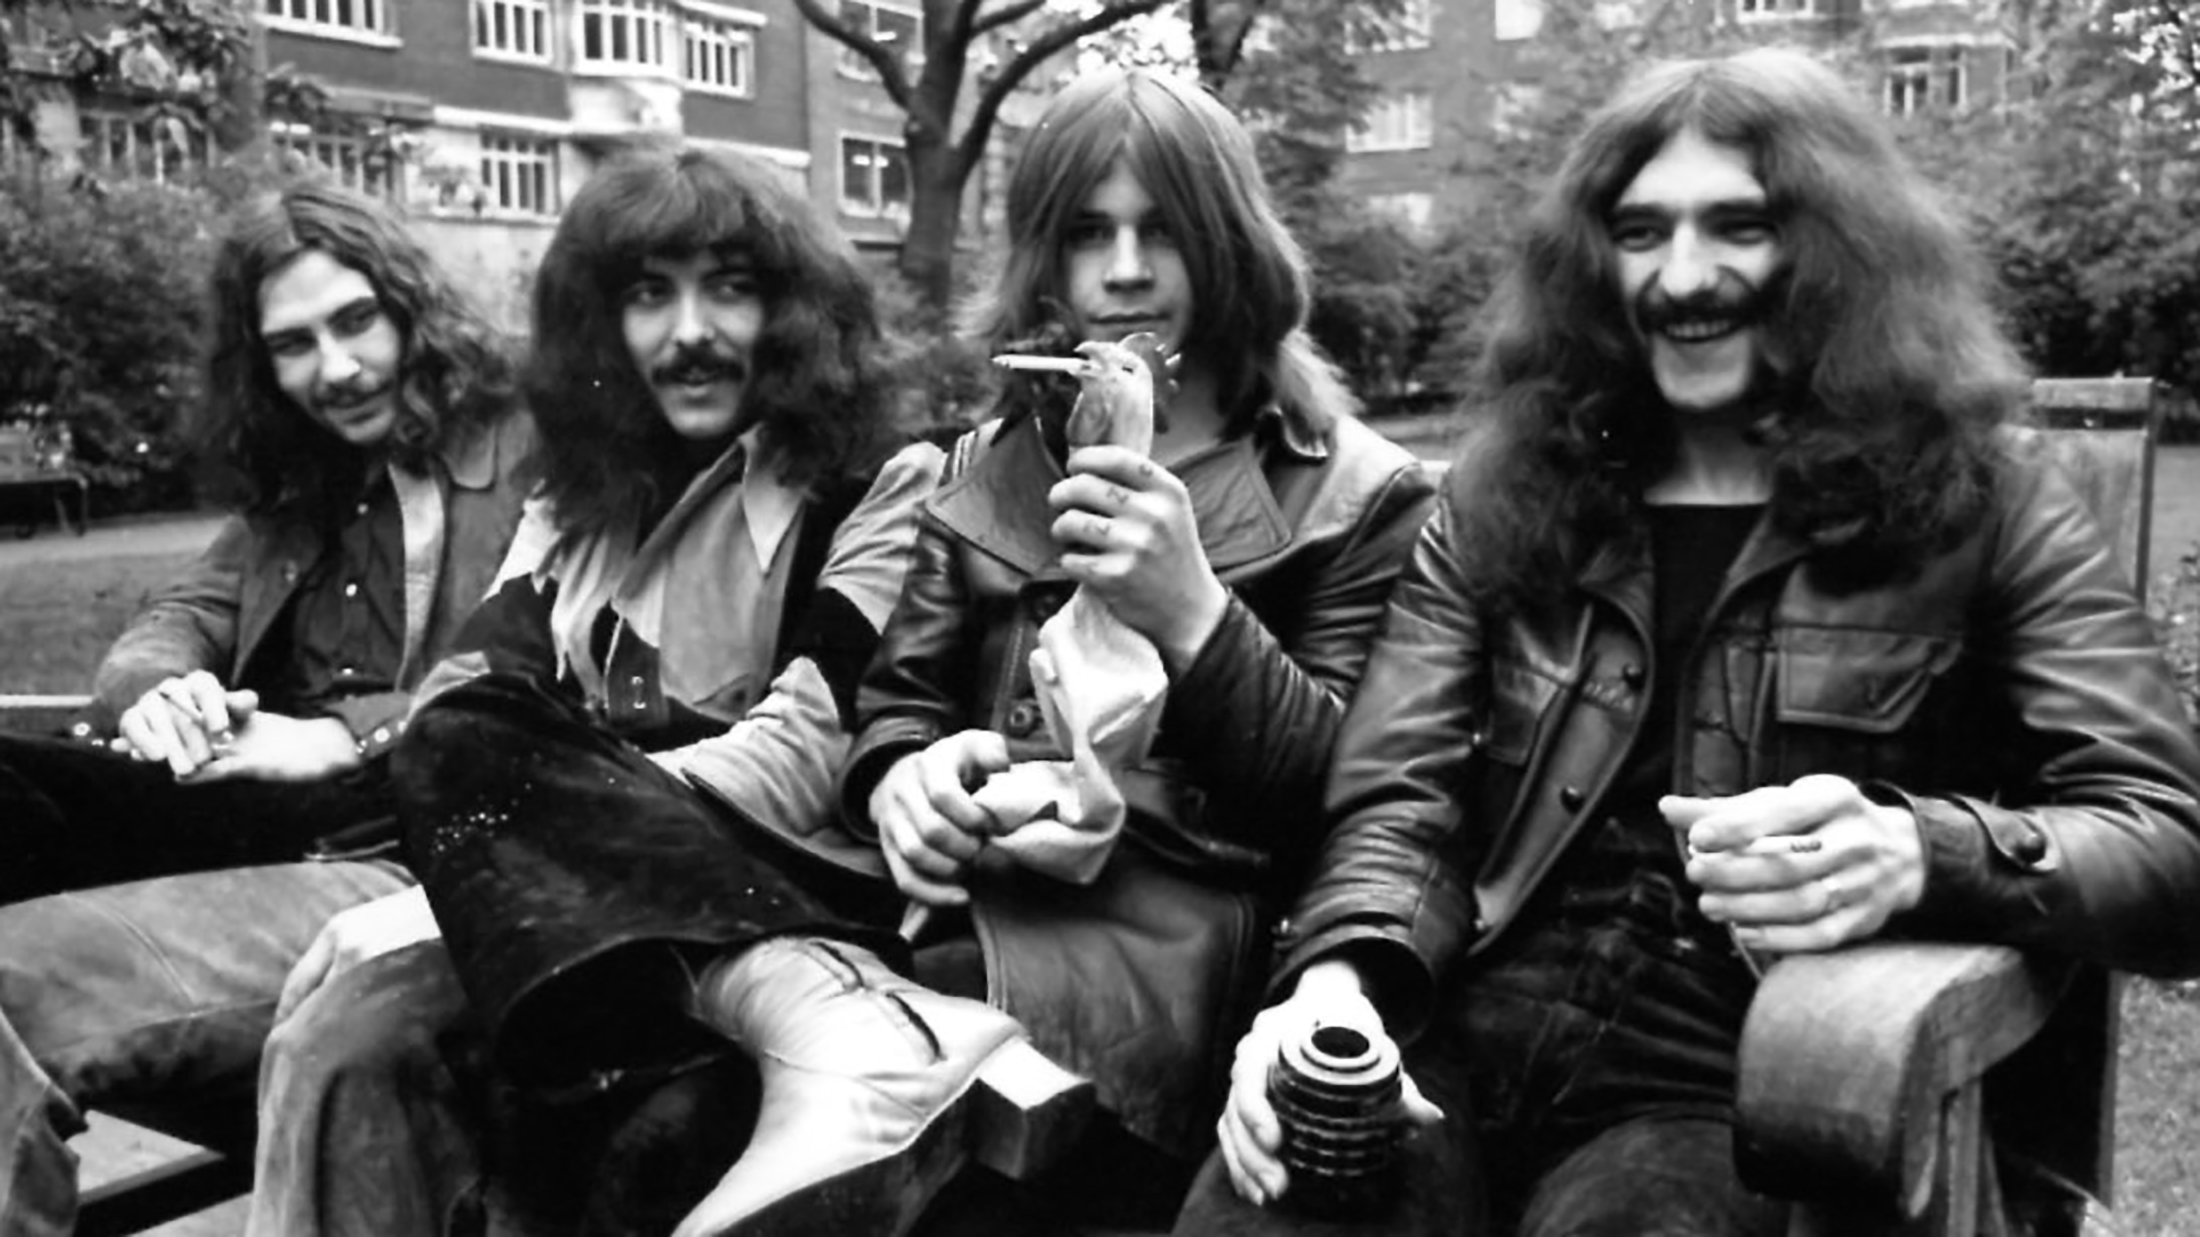 54 Years Ago: Black Sabbath Release Debut Album + Invent Metal